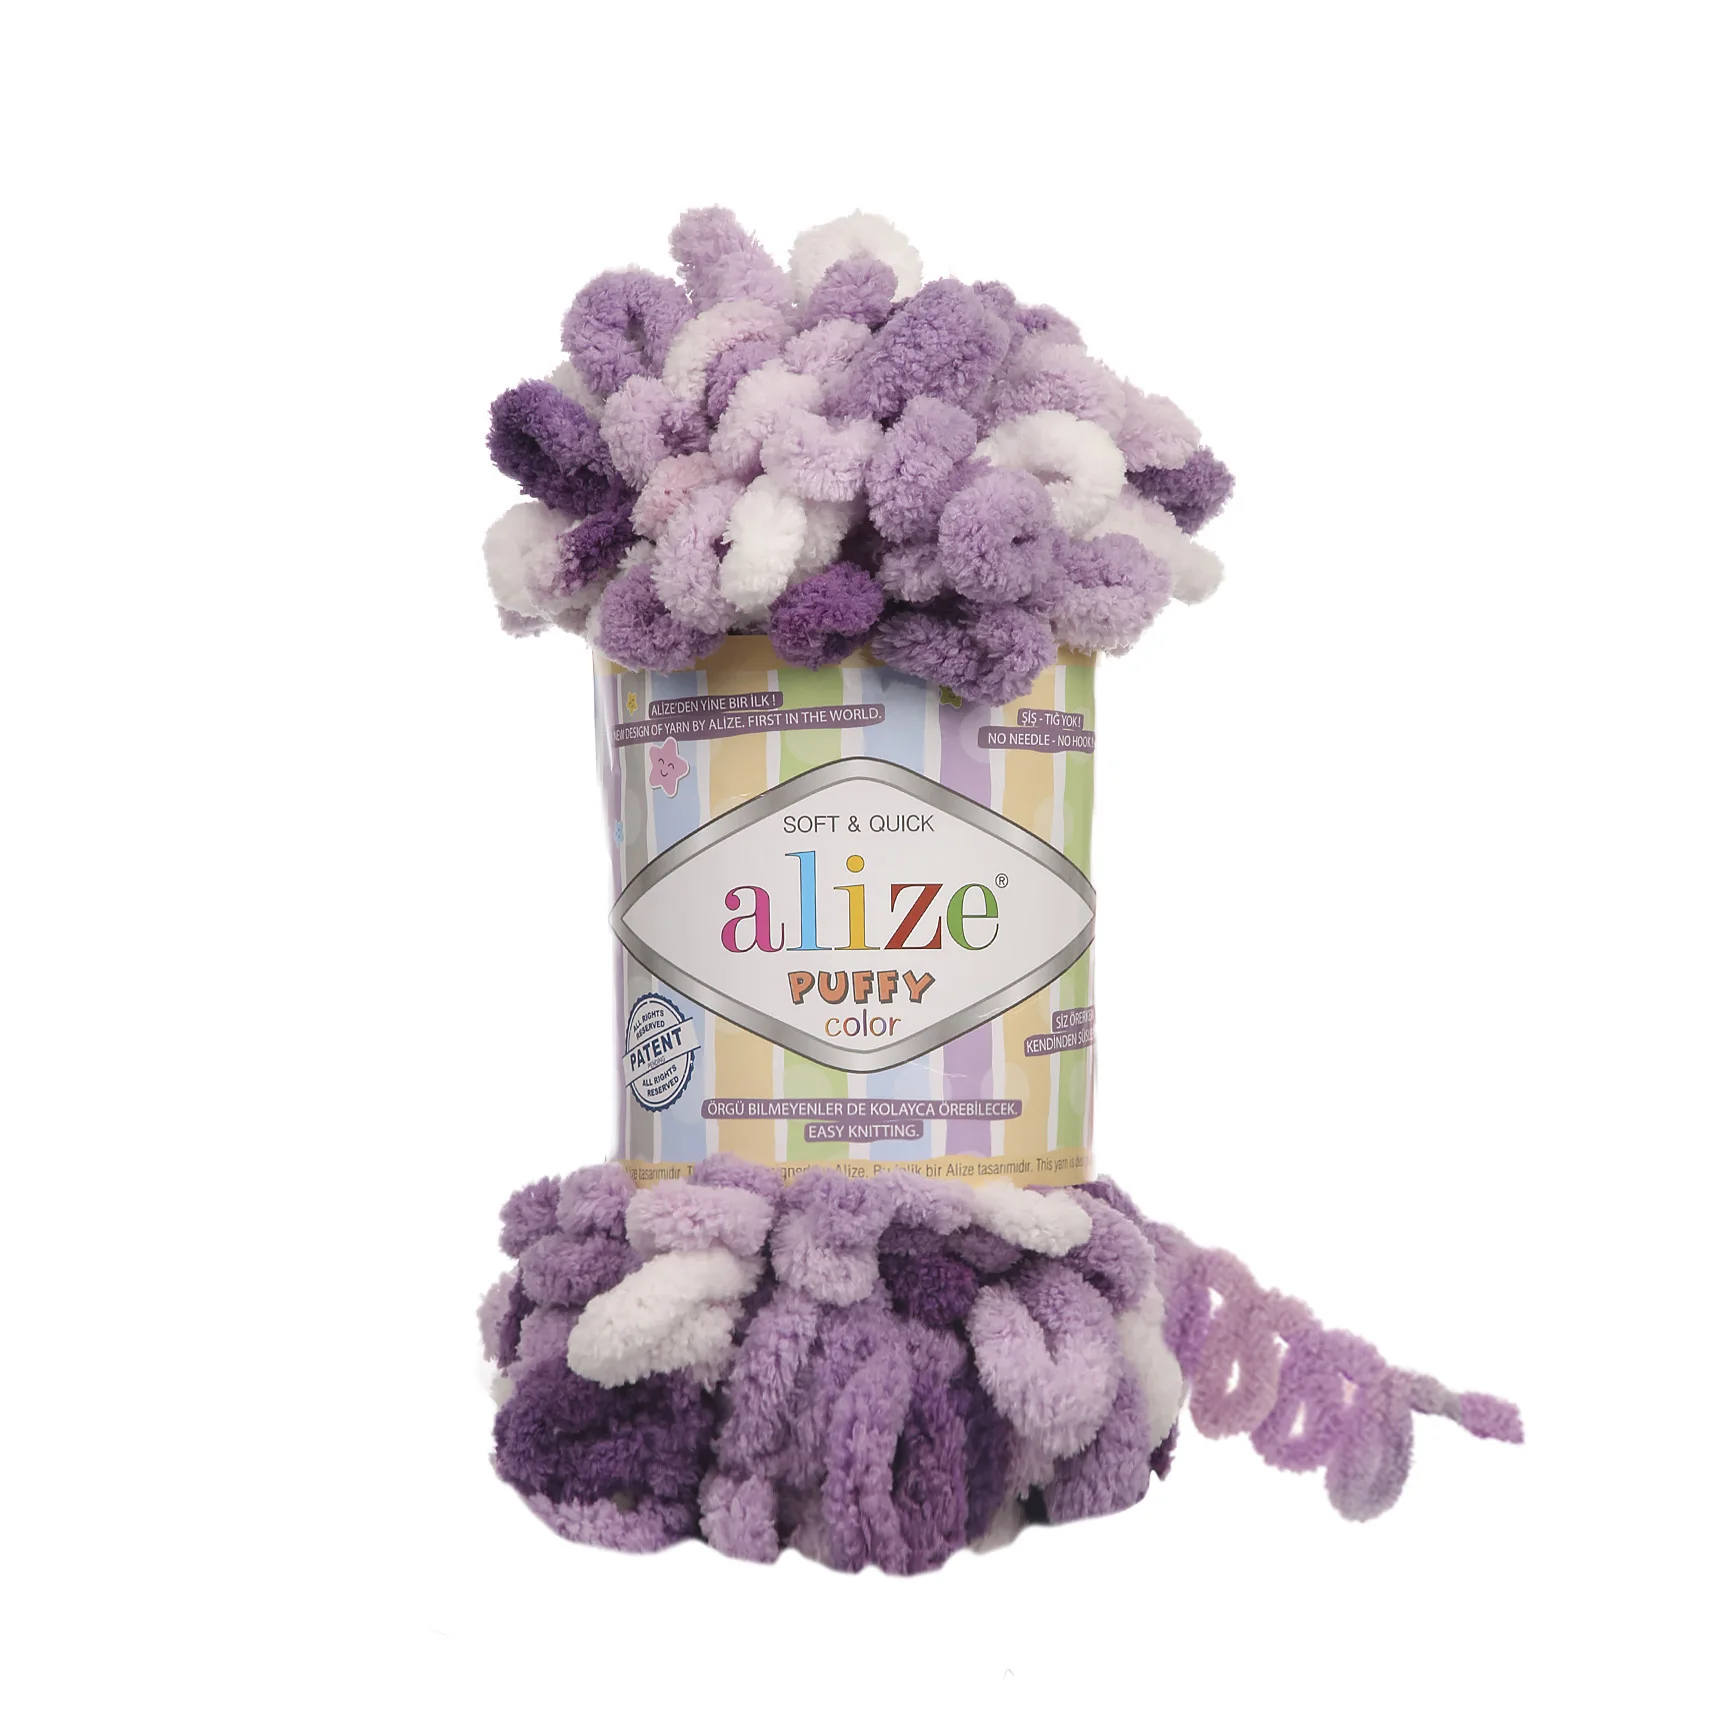 Alize Puffy COLOR Yarn 100gr Variegated Finger Crochet Knitting